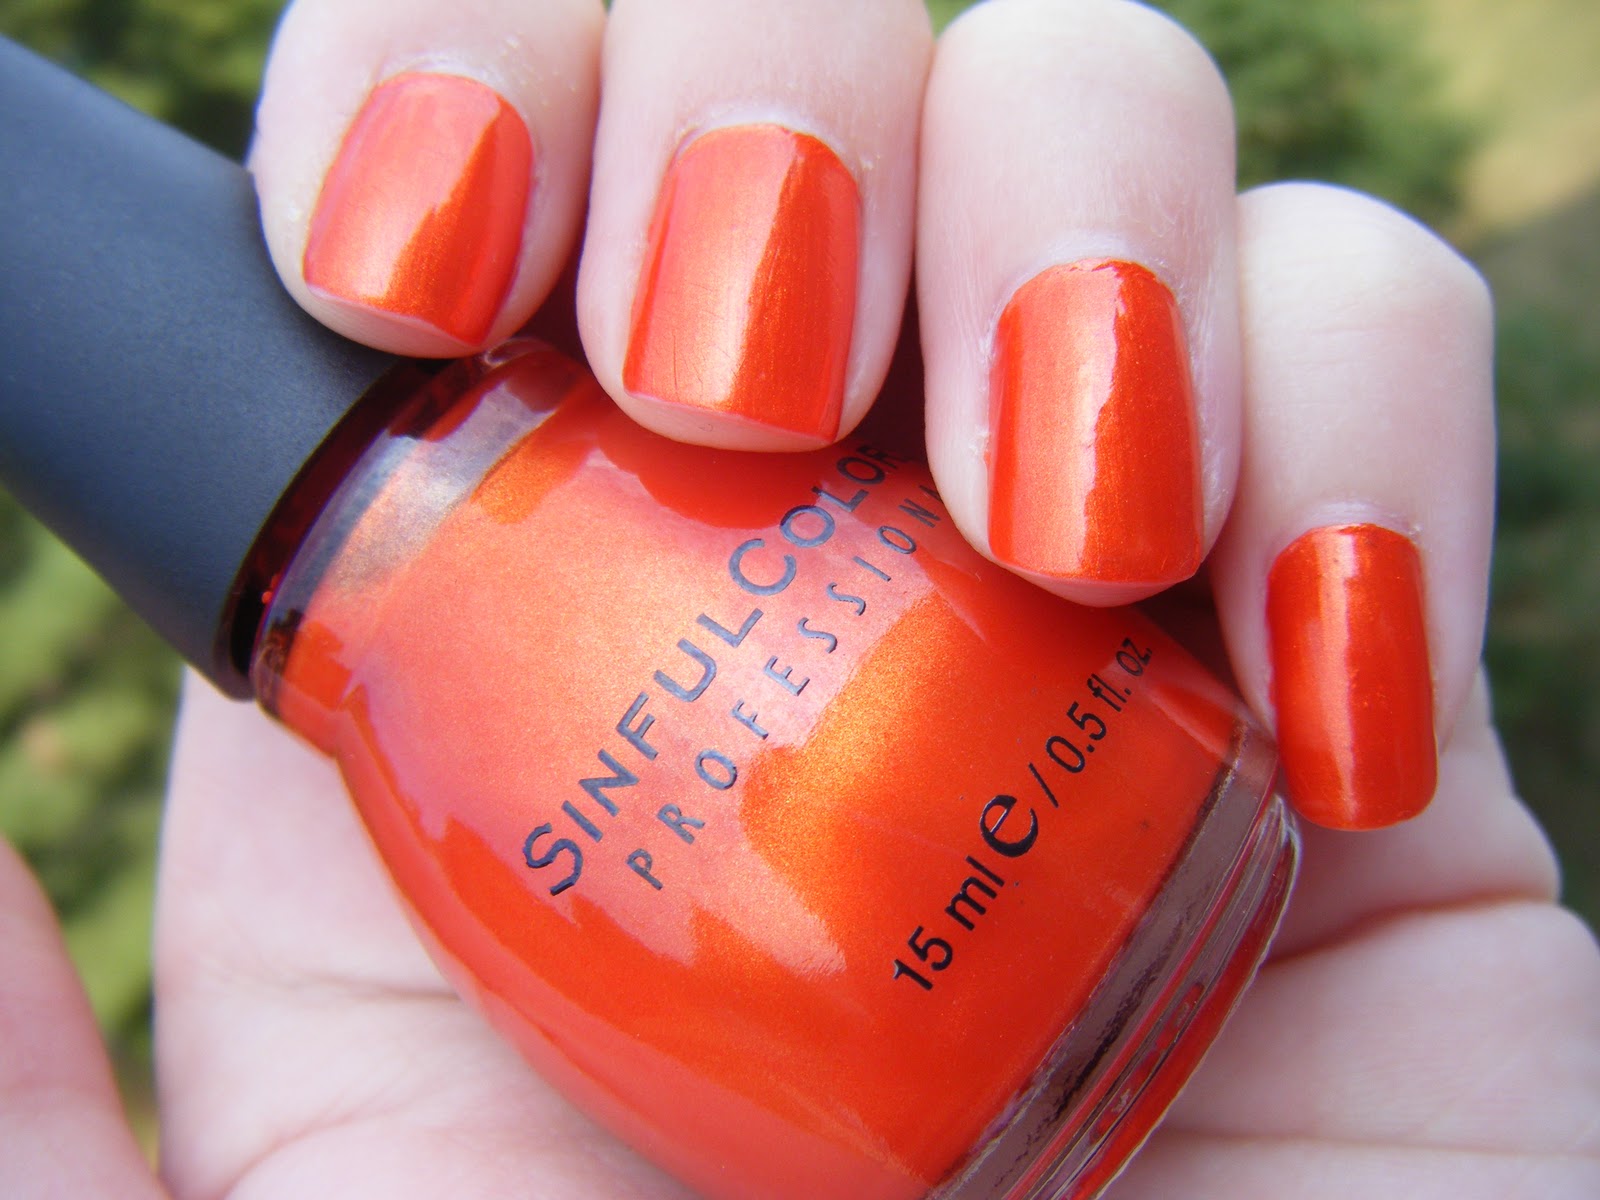 8. Sinful Colors Courtney Orange Nail Polish Shade - wide 7